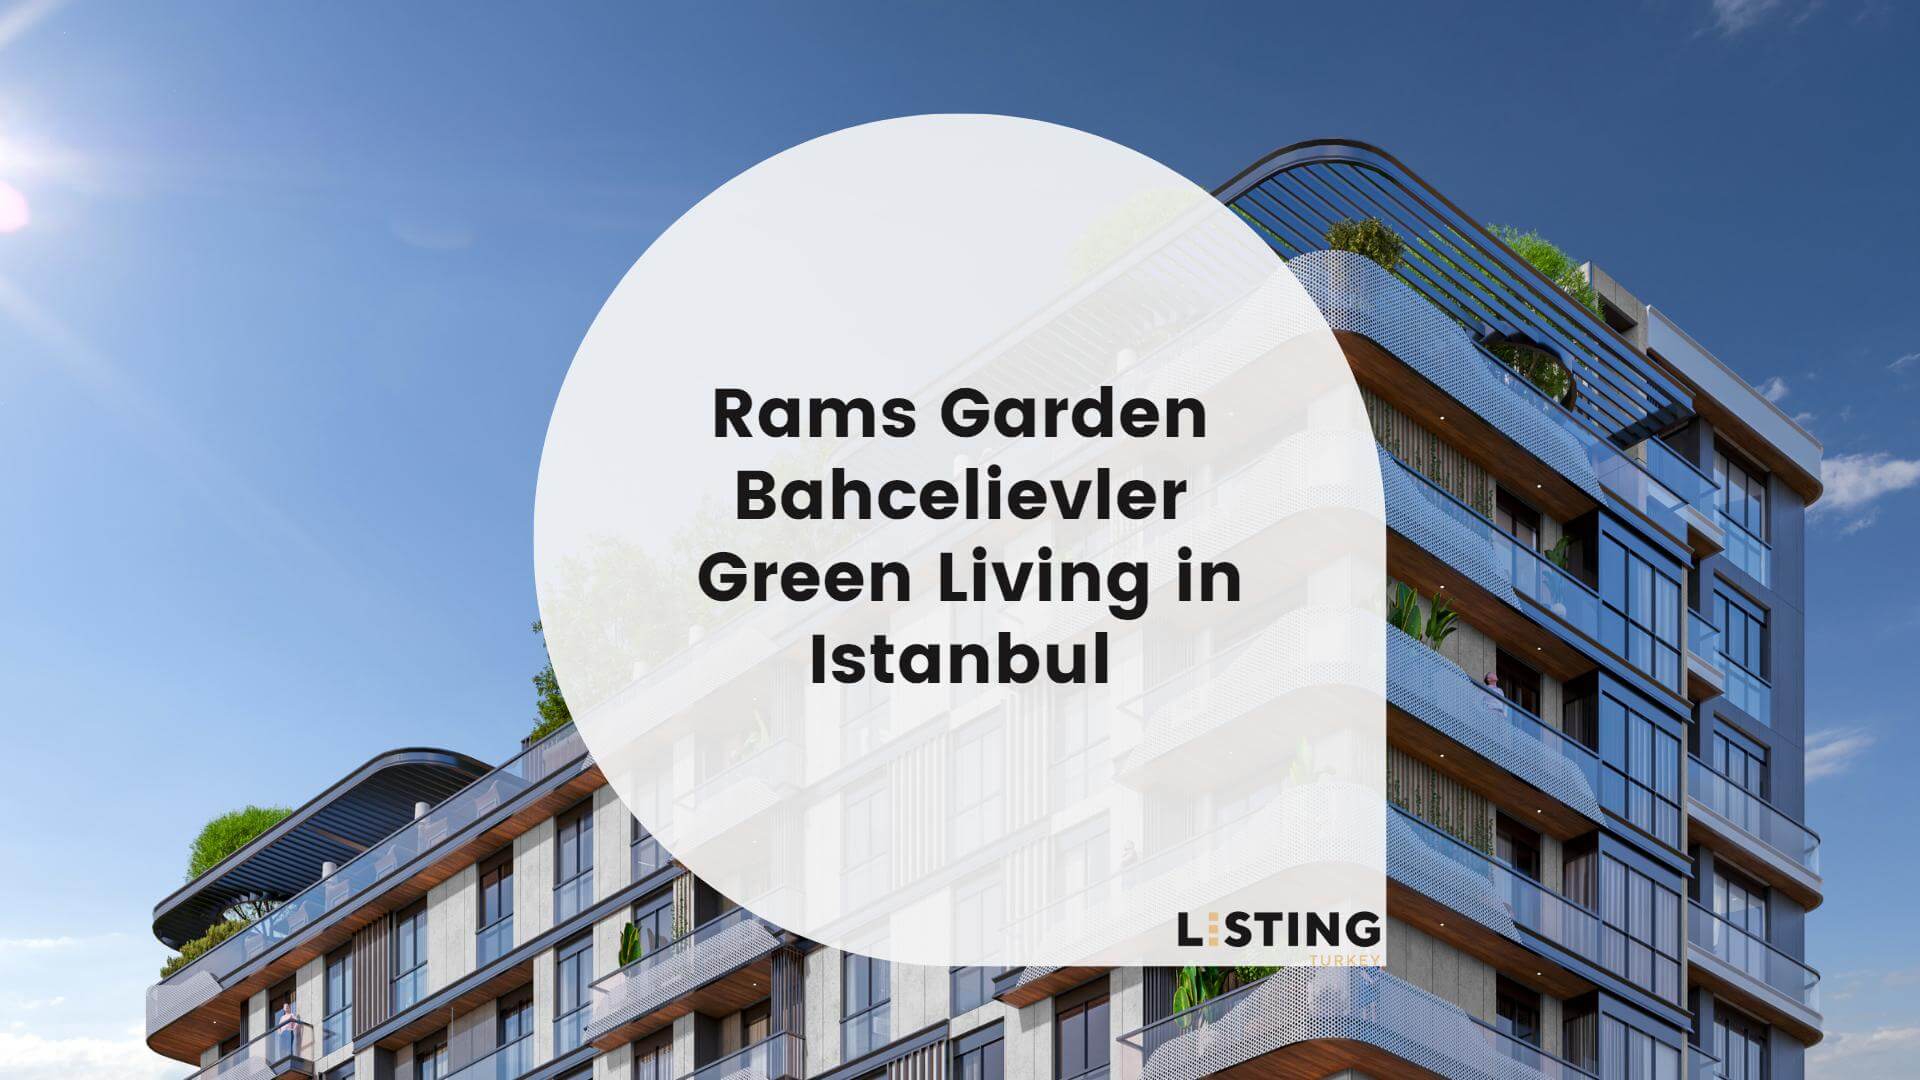 Rams Garden Bahcelievler Green Living in Istanbul